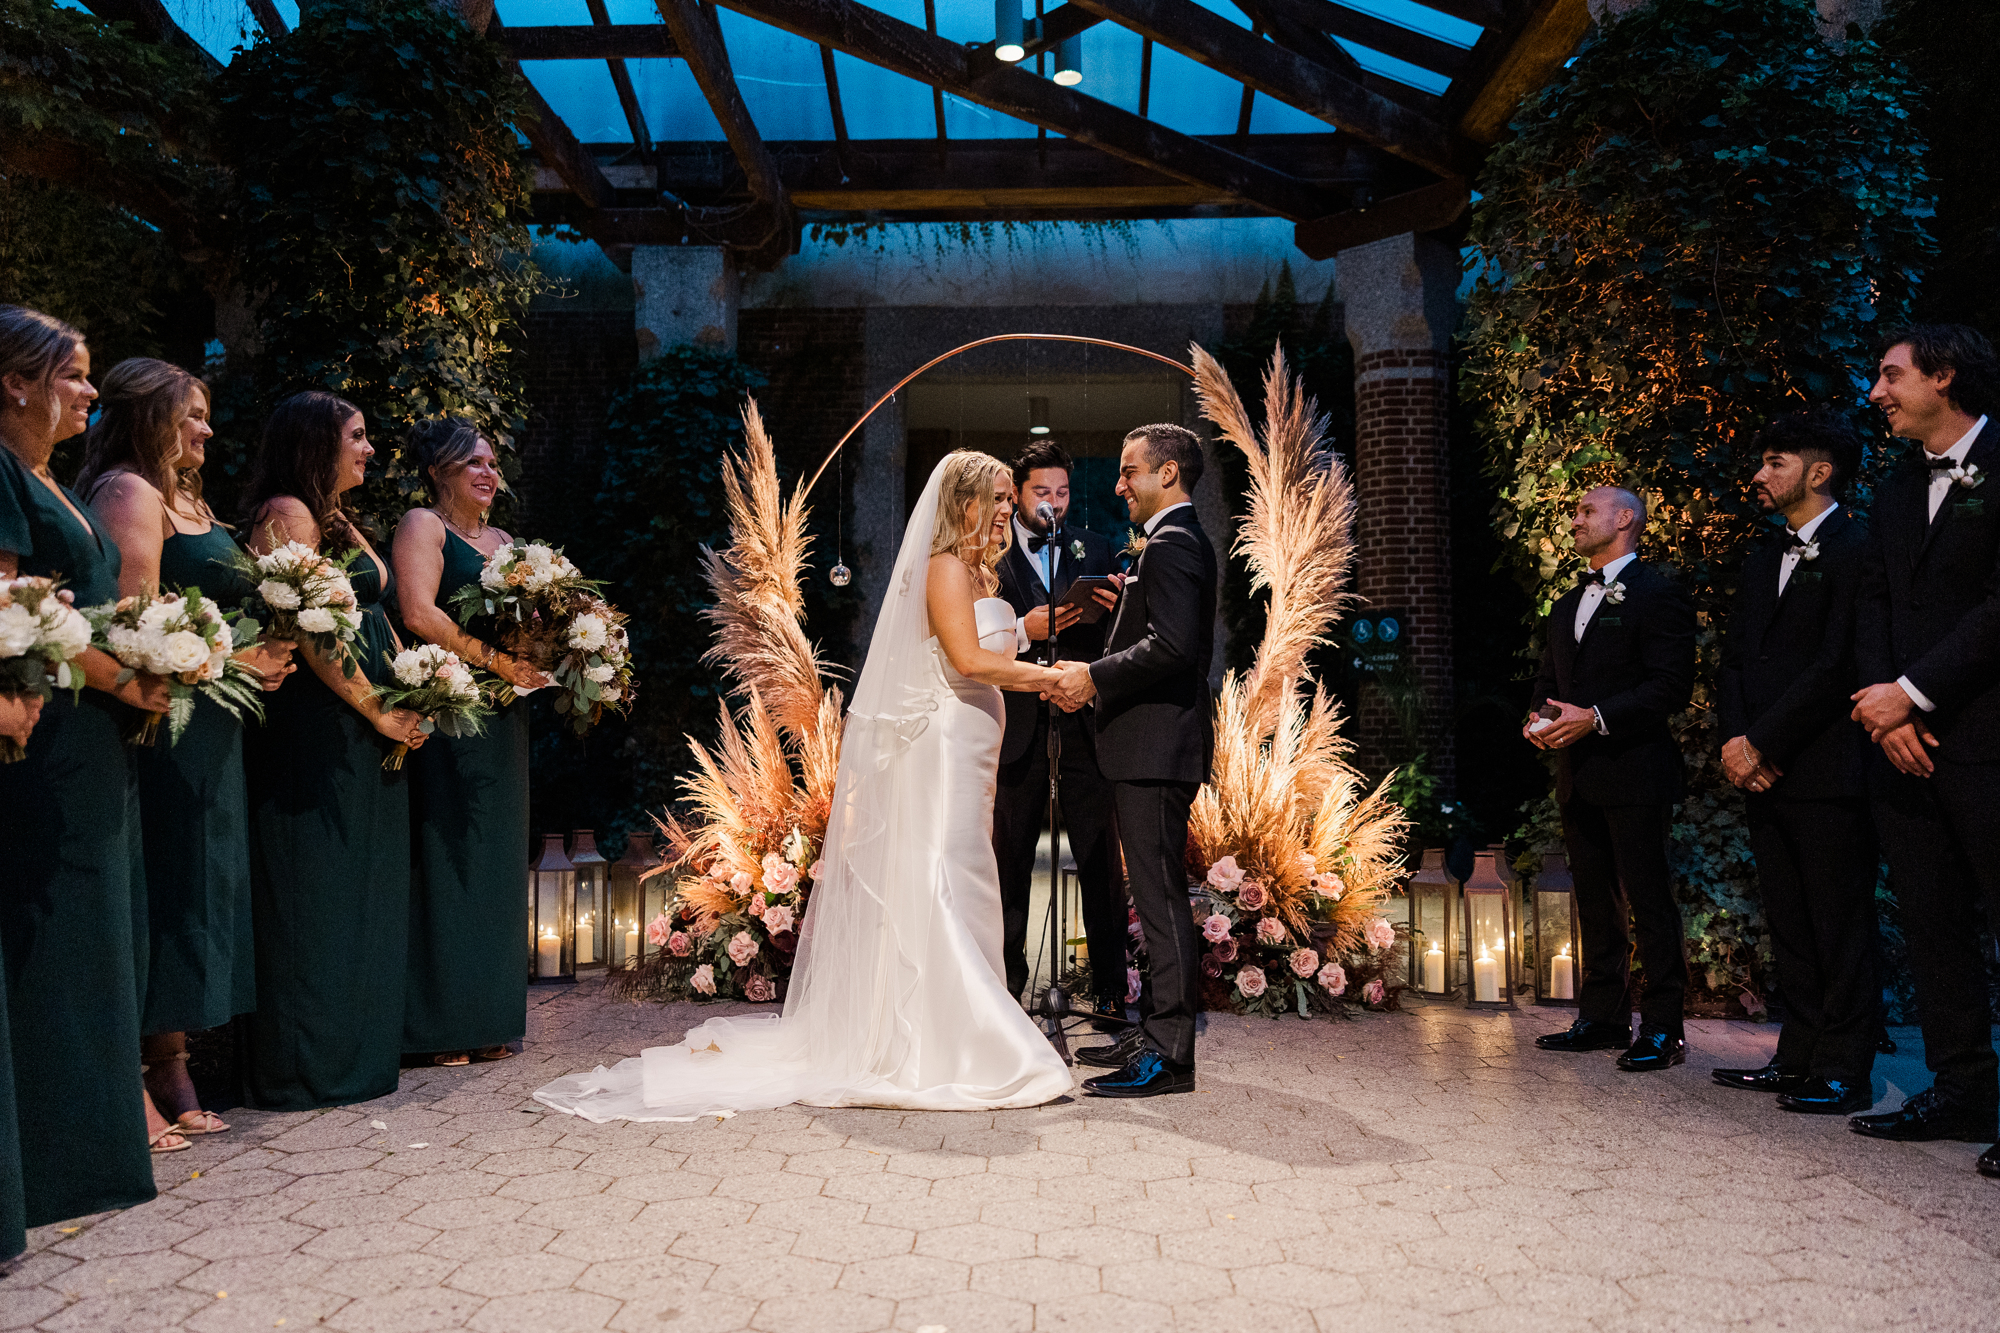 Romantic Rainy Wedding Photos at Central Park Zoo